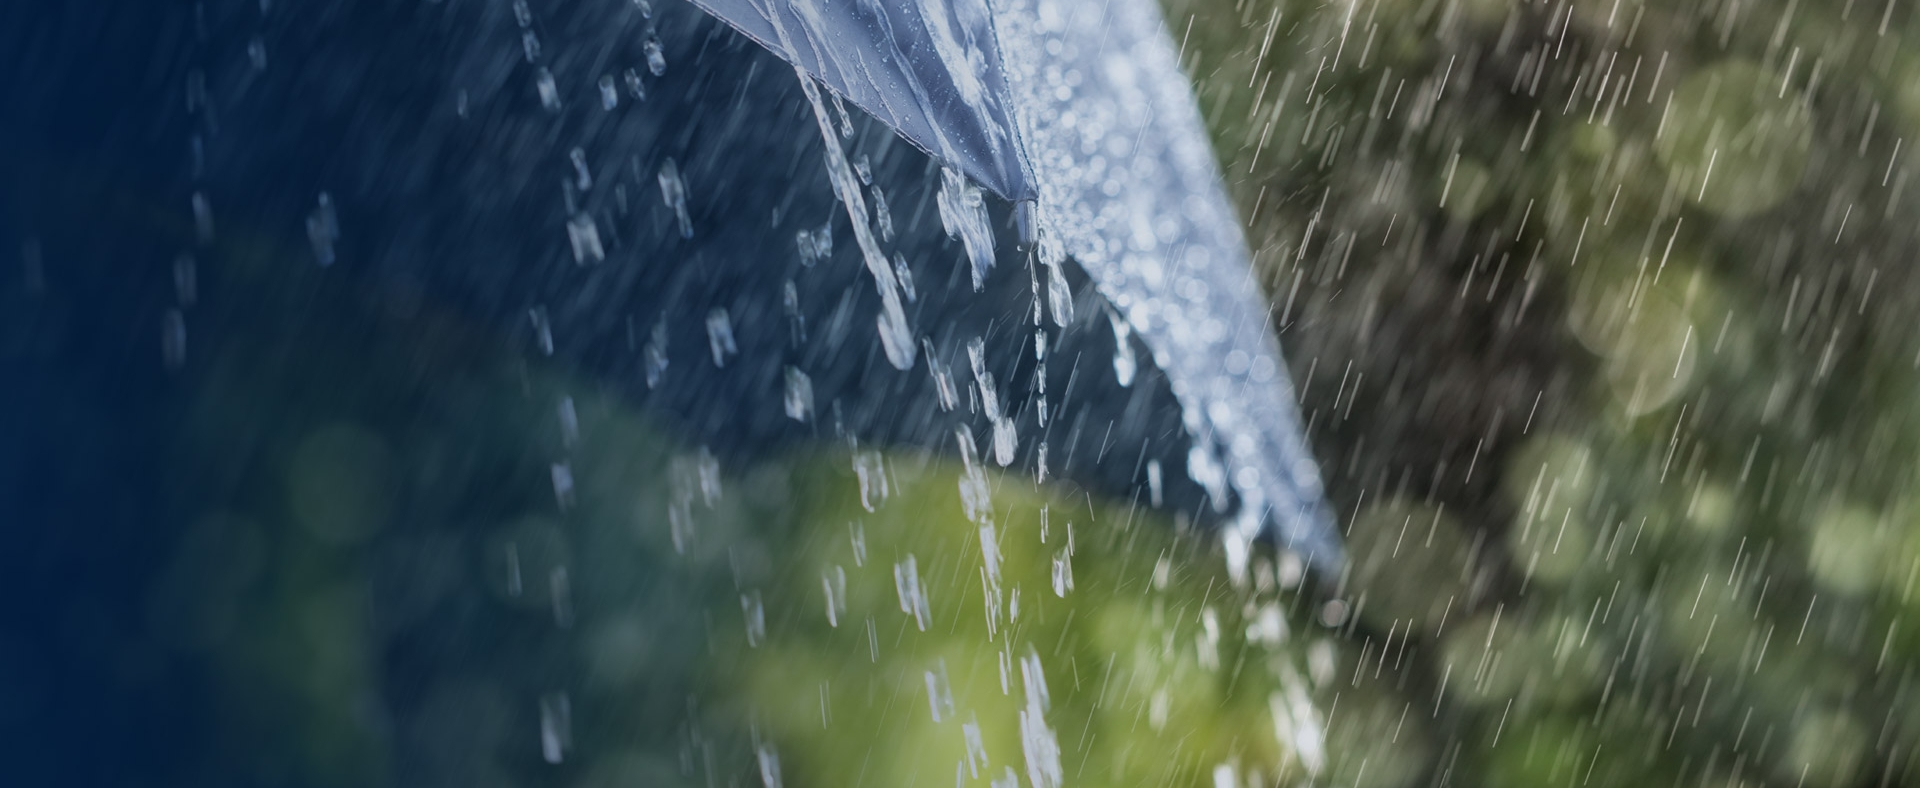 Rainwater falling on an umbrella.